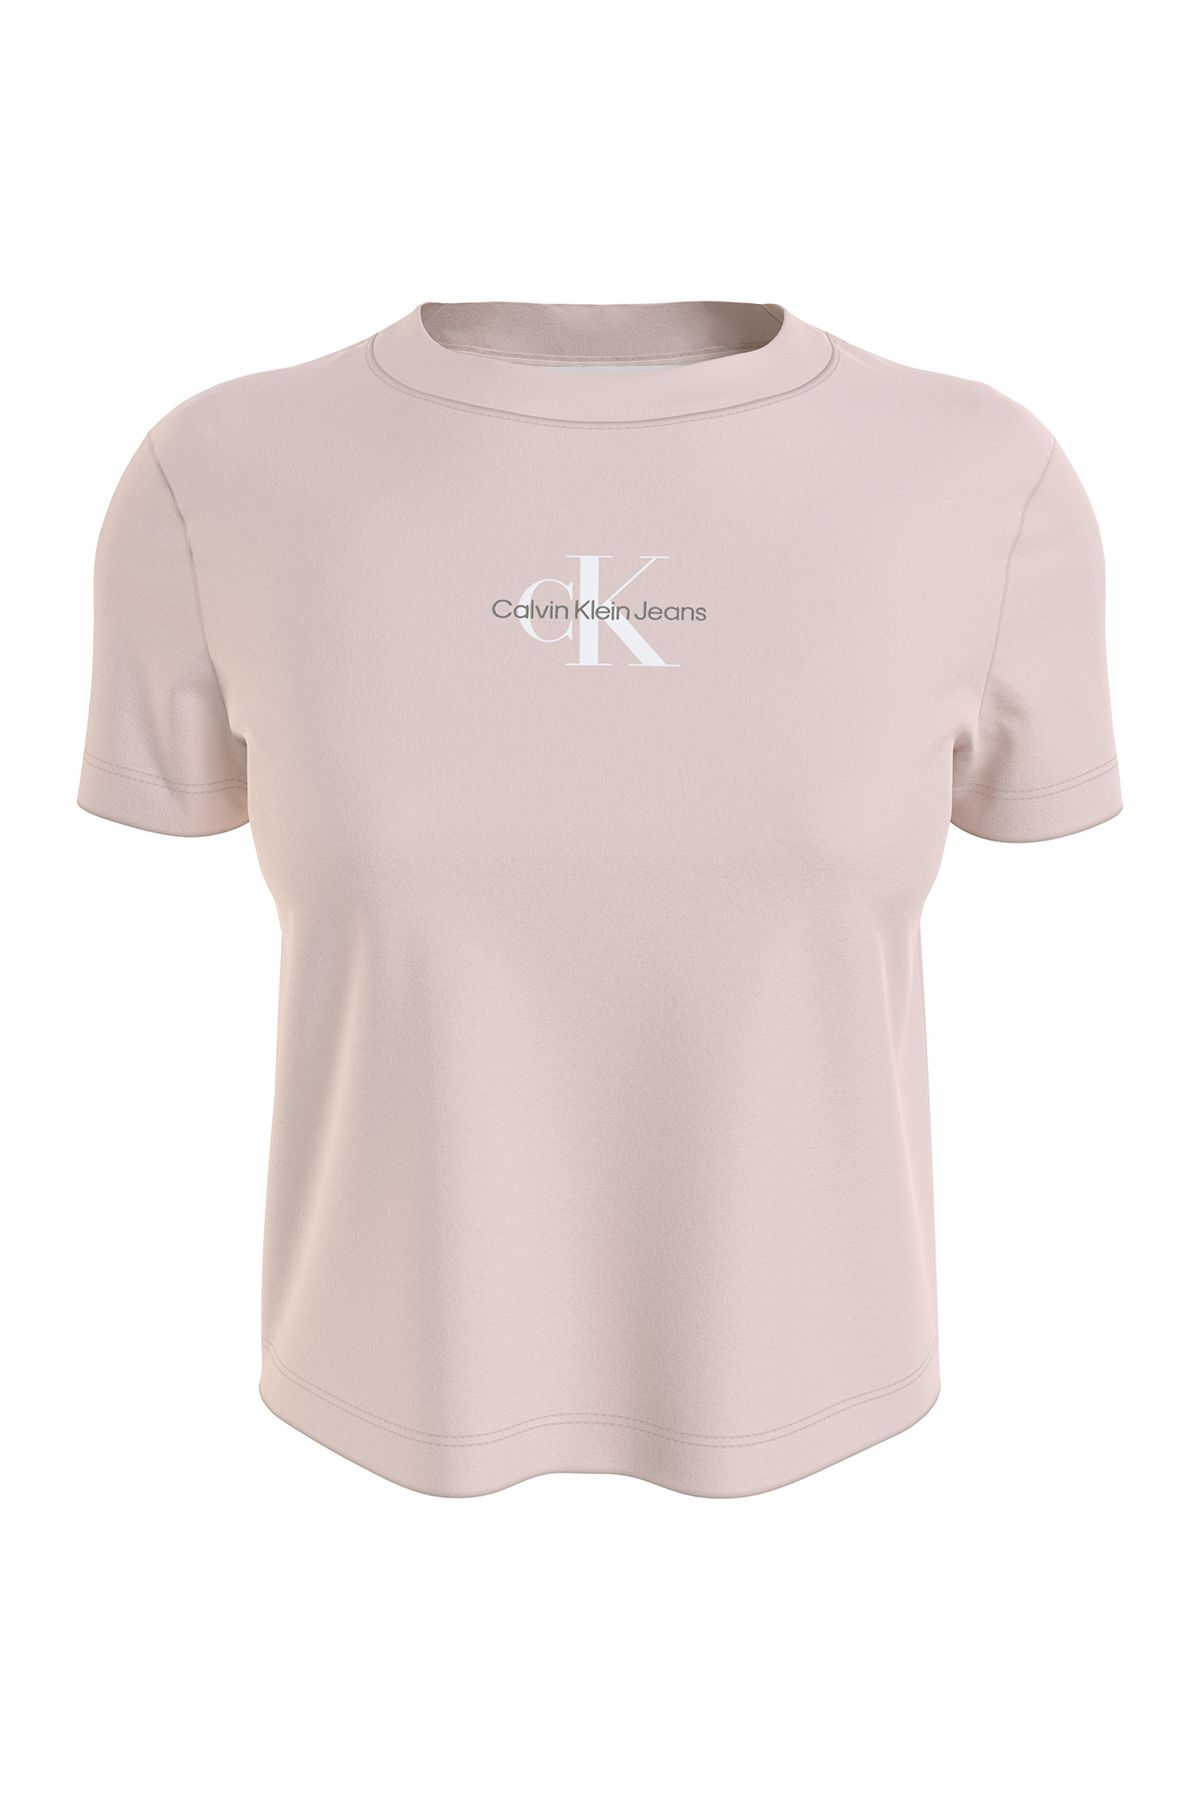 Calvin Klein Sepia Rose T-Shirt For Kadın / Kız